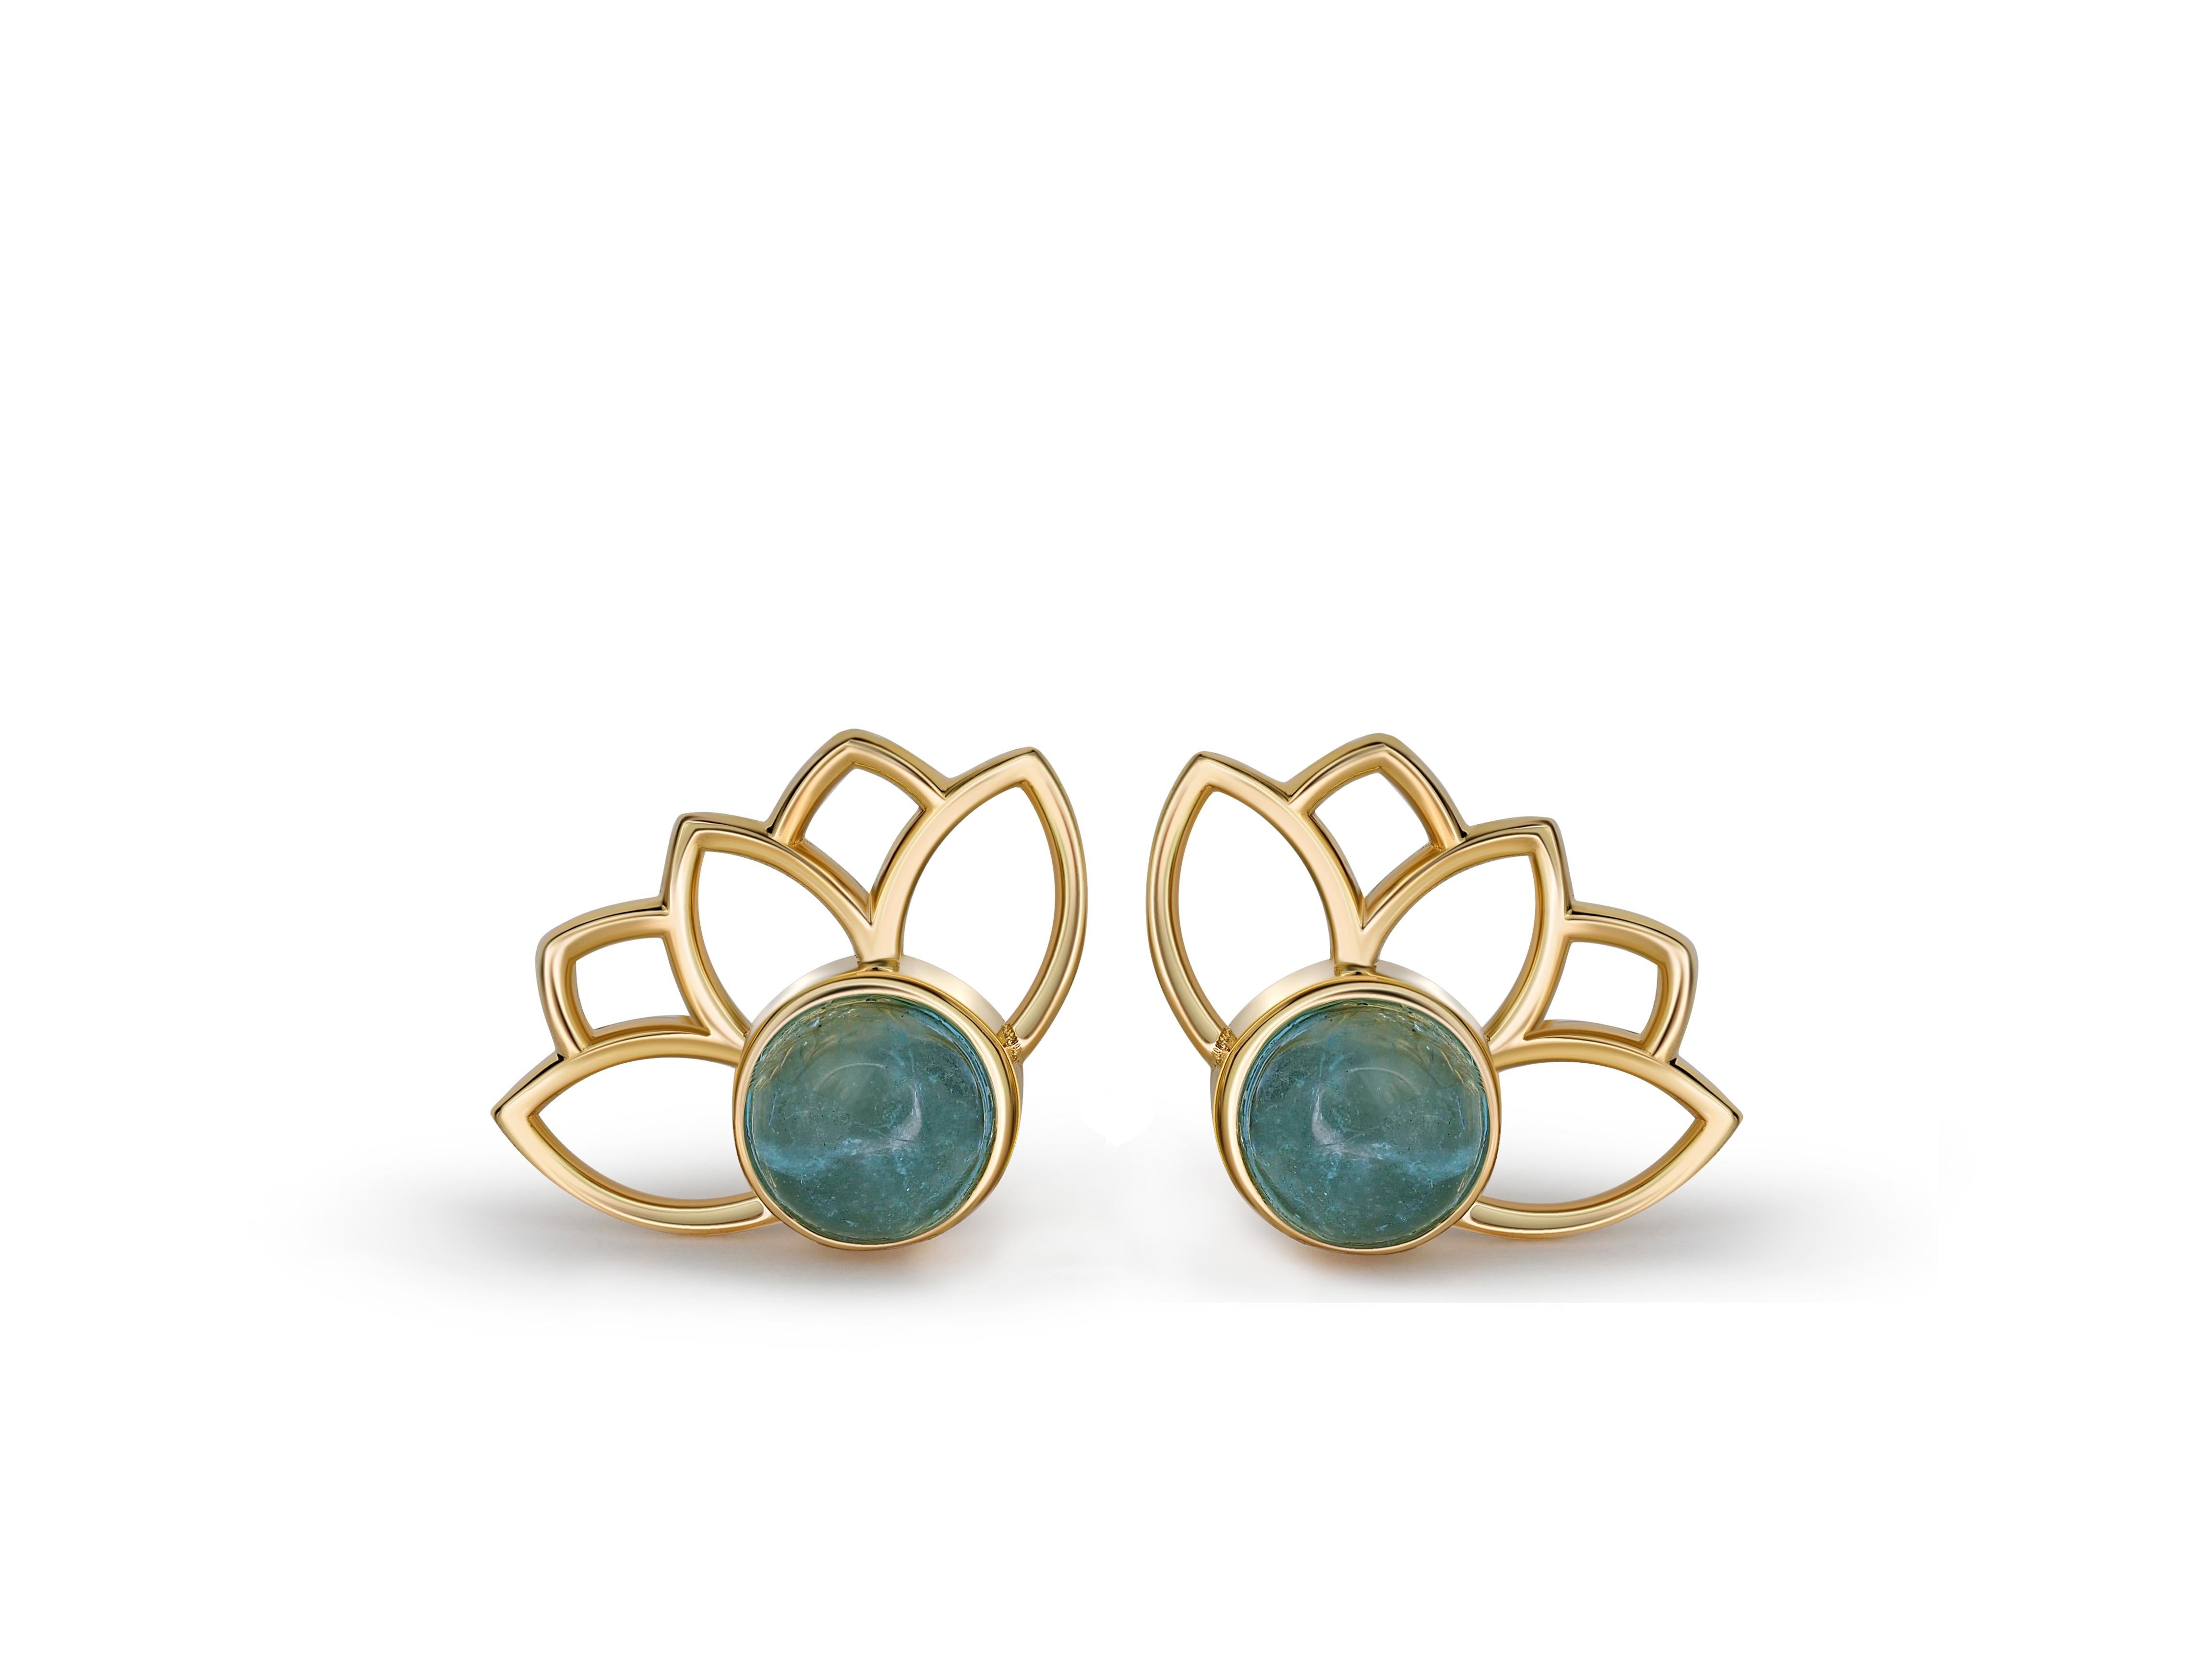 Cabochon Lotus Earrings Studs with Aquamarines in 14k Gold, Aquamarine Cab Earrings